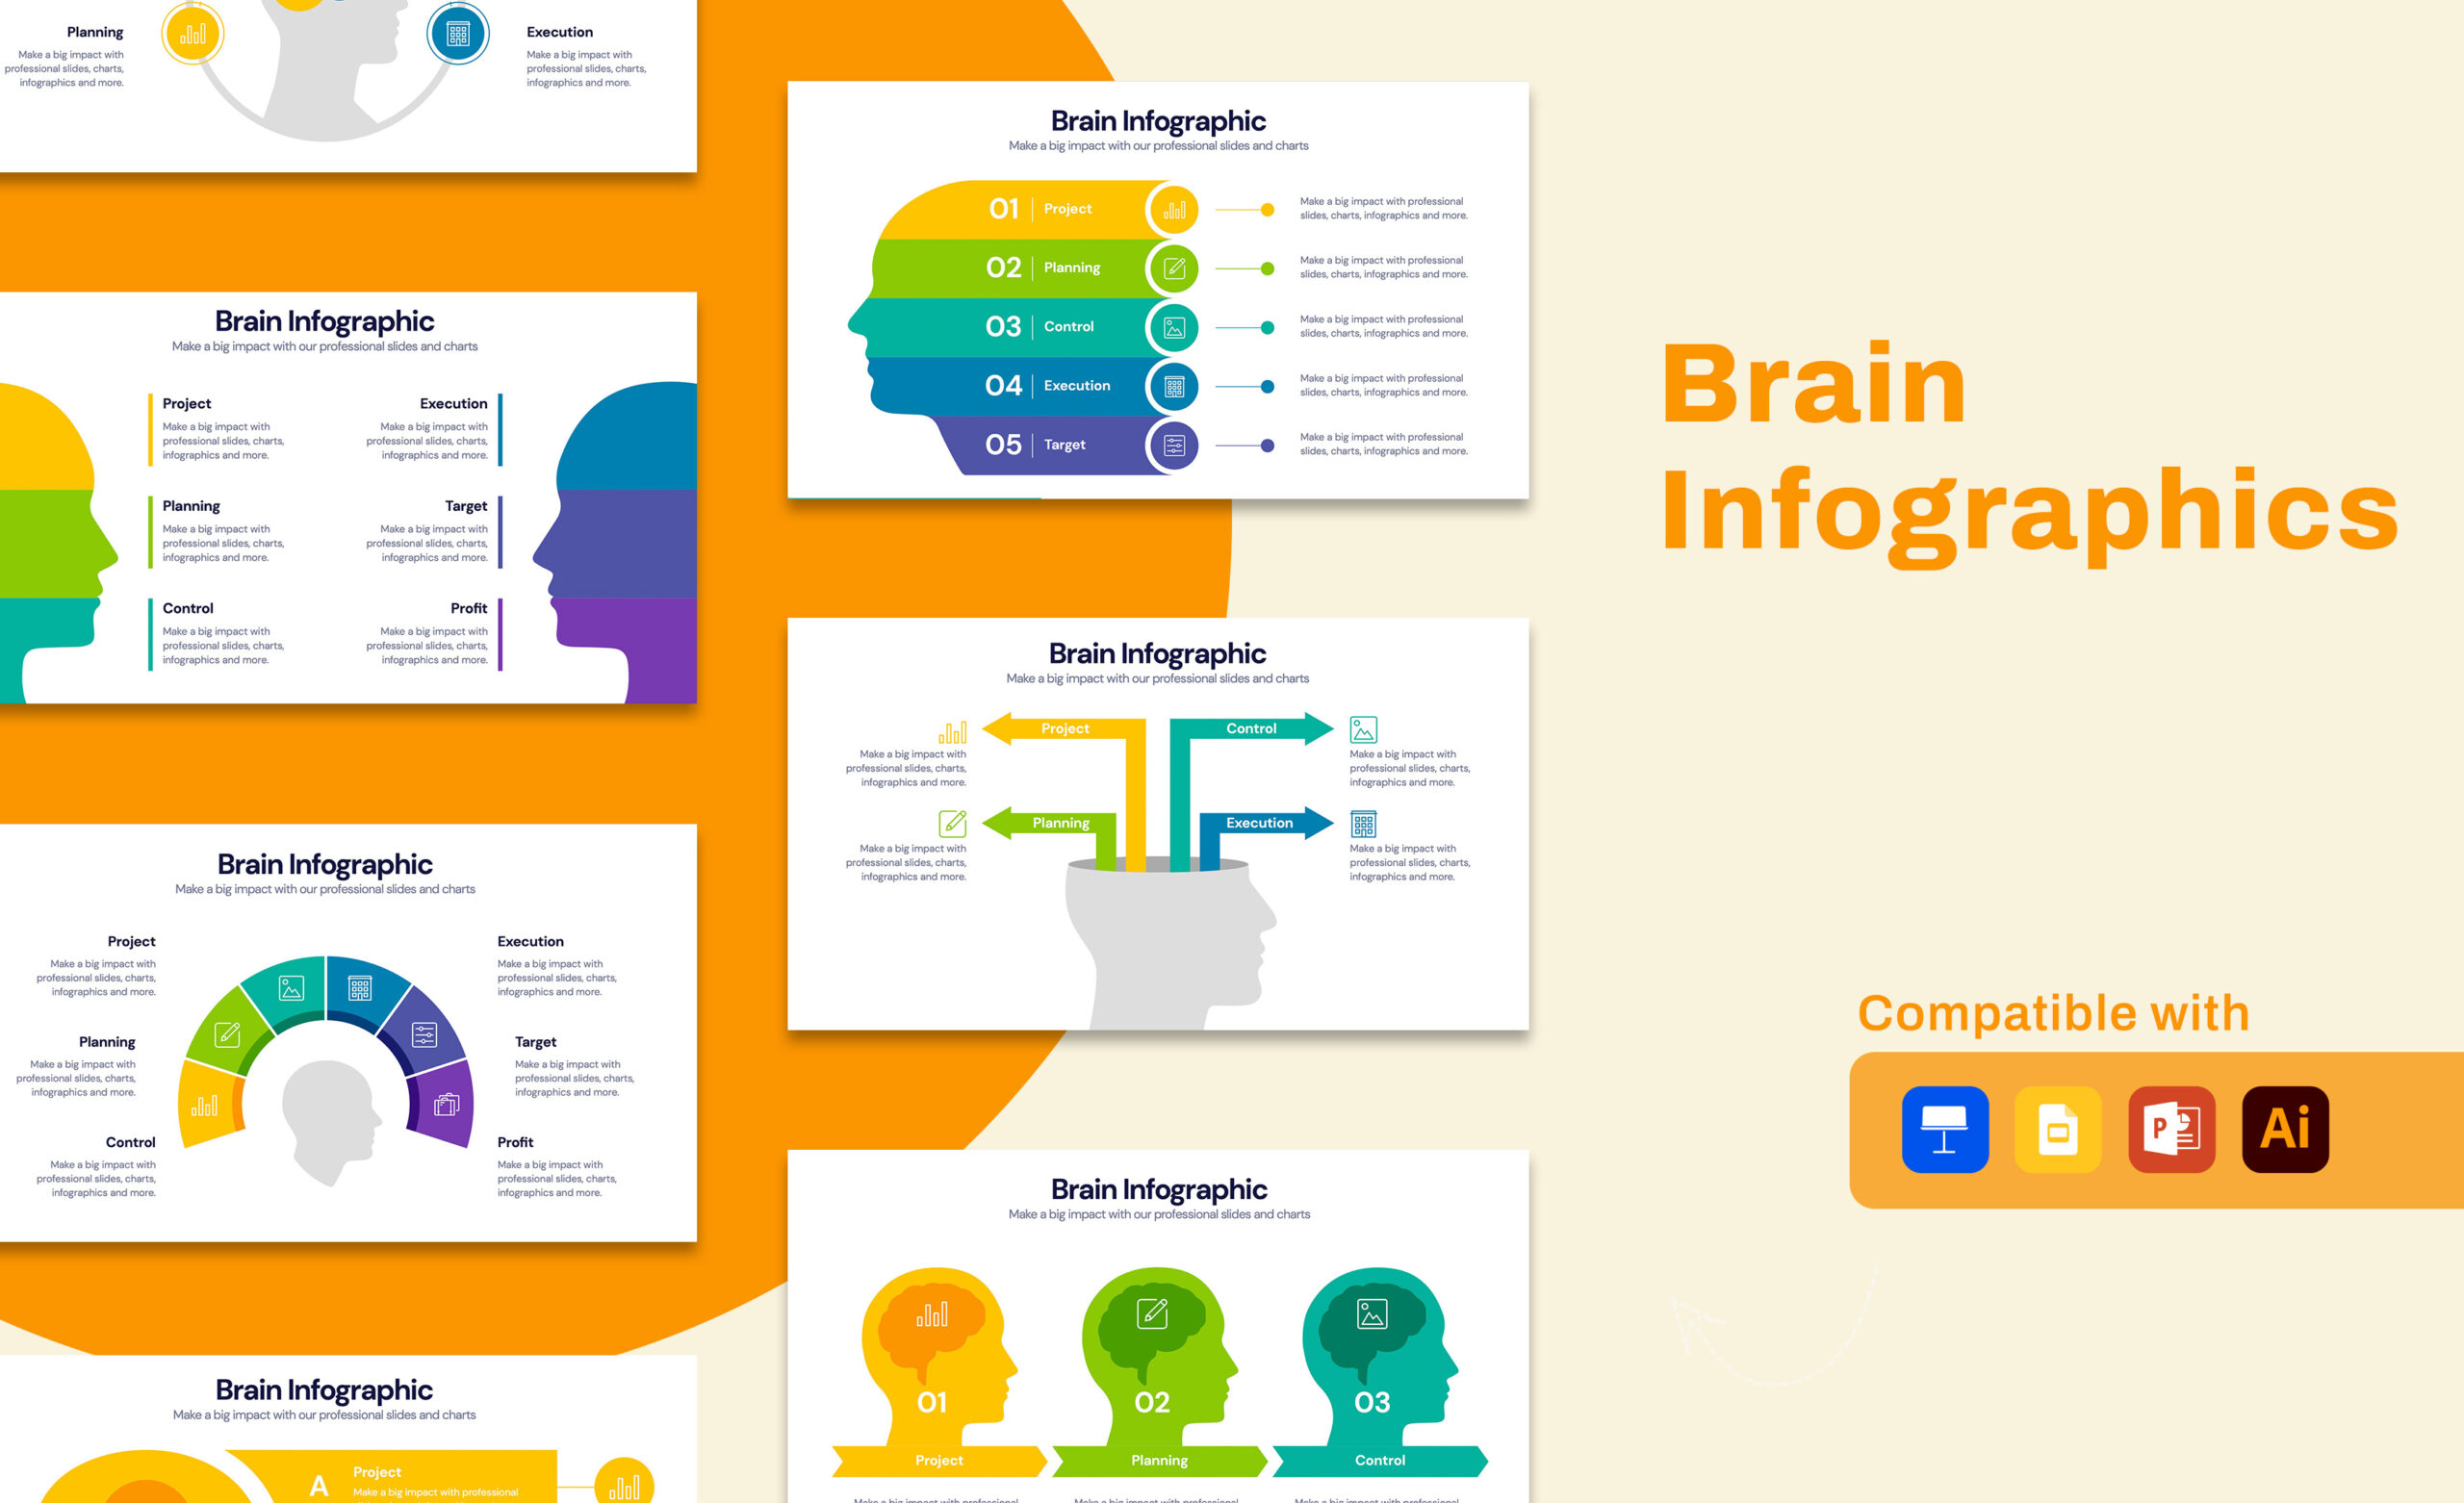 Copia de Brain Infographics